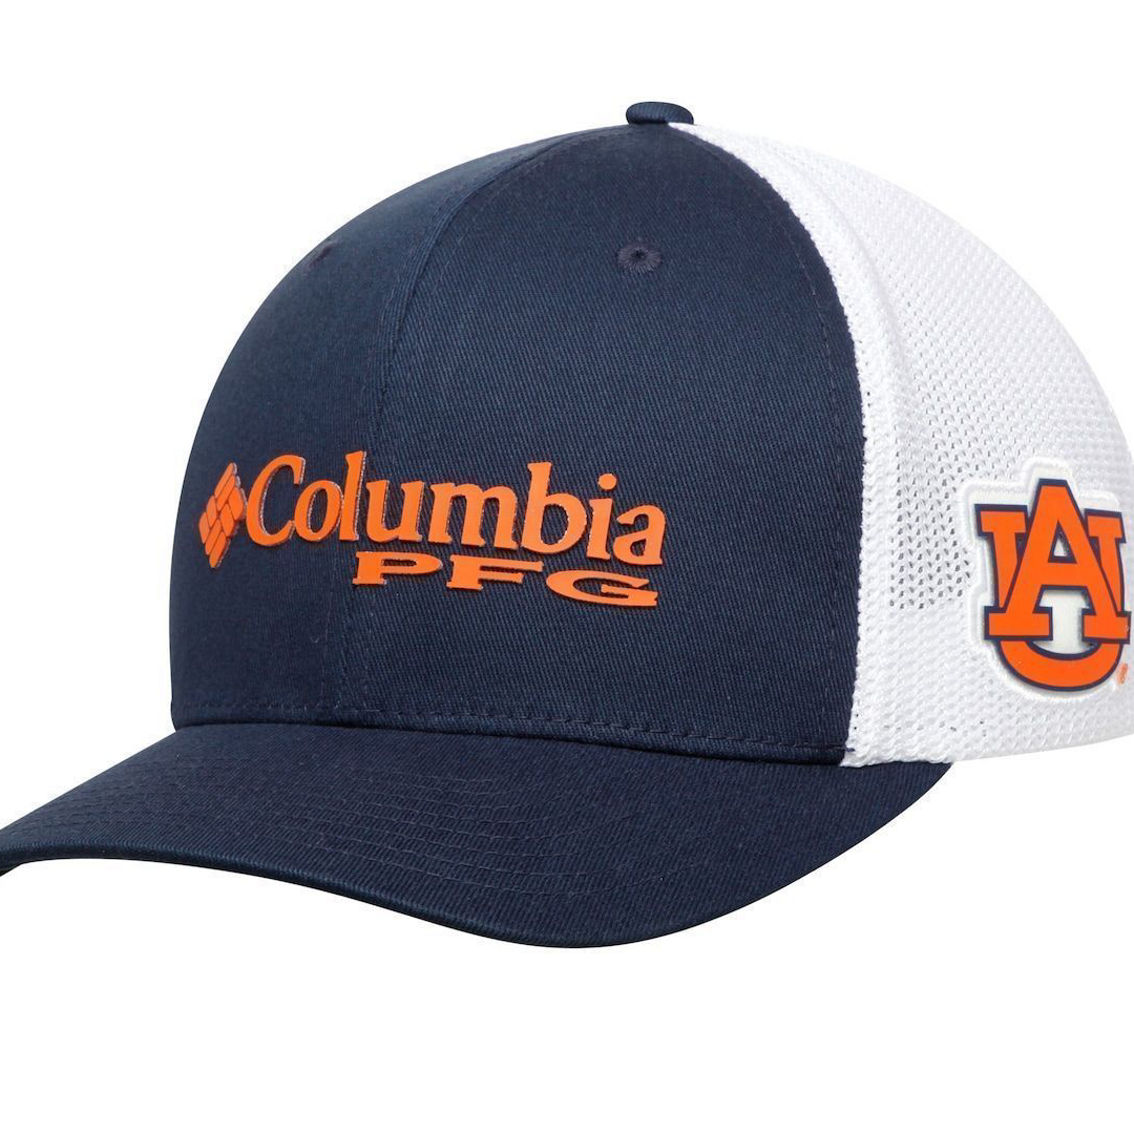 Men's Columbia Navy Auburn Tigers Collegiate PFG Flex Hat - Image 2 of 4